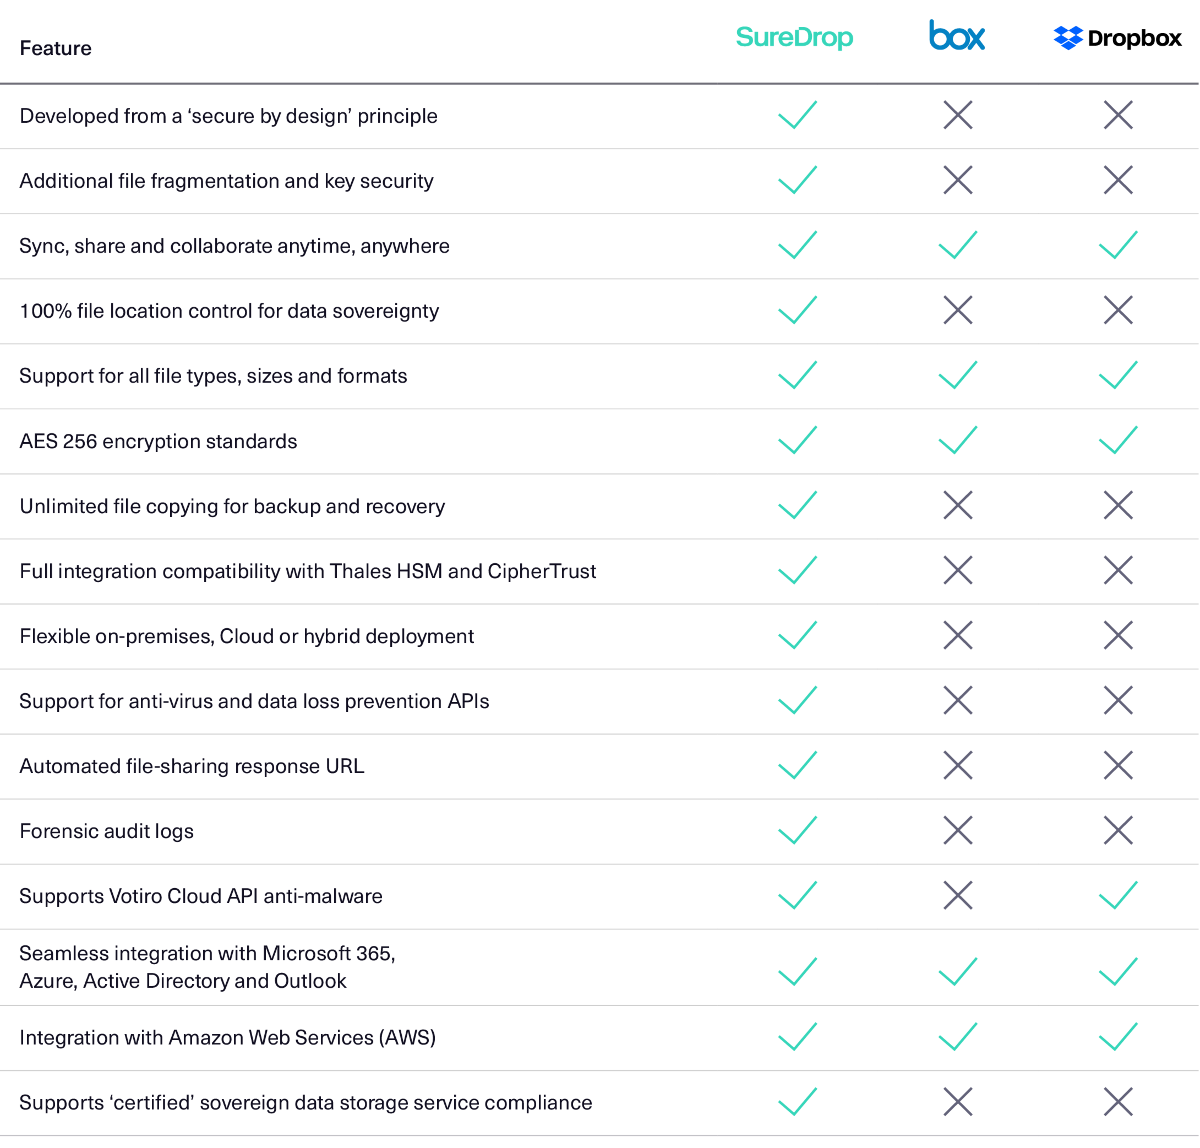 SureDrop comparison table